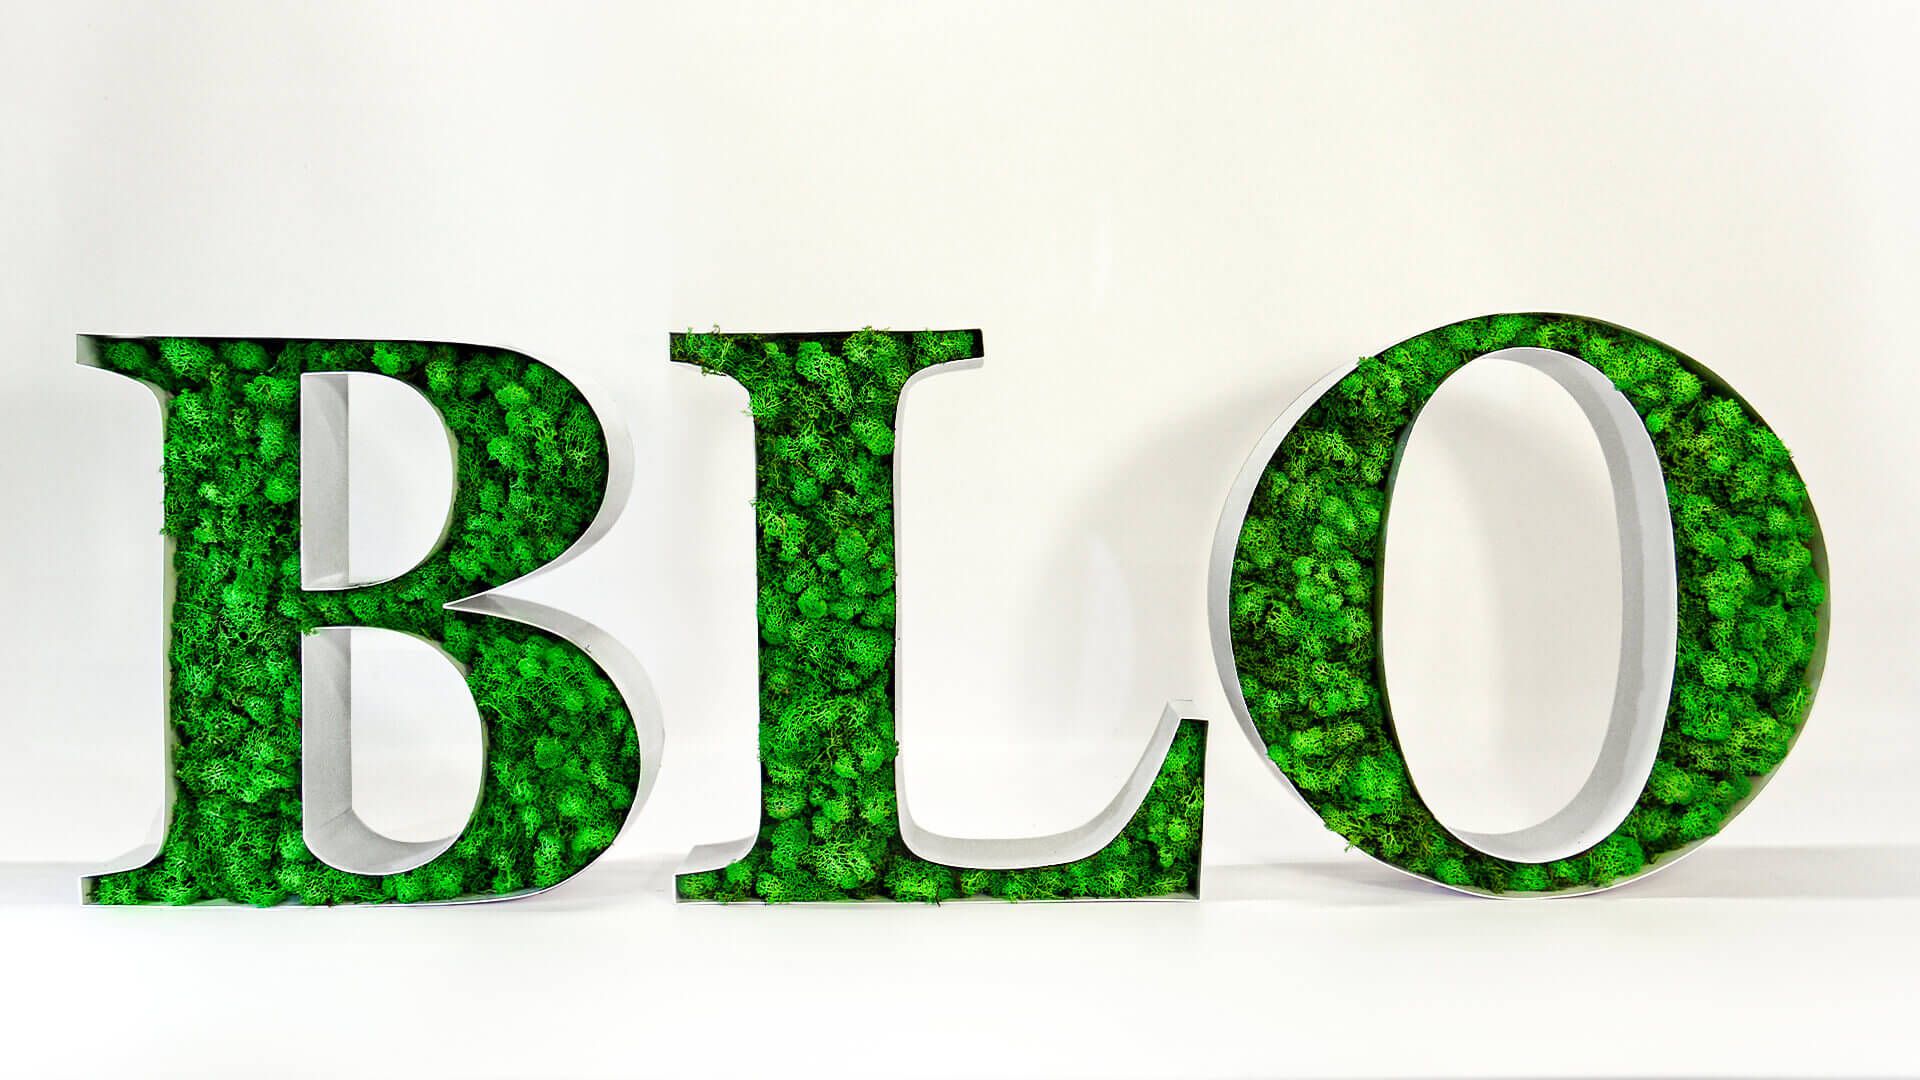 Letras decorativas BLO - Letras decorativas BLO, rellenas de musgo.